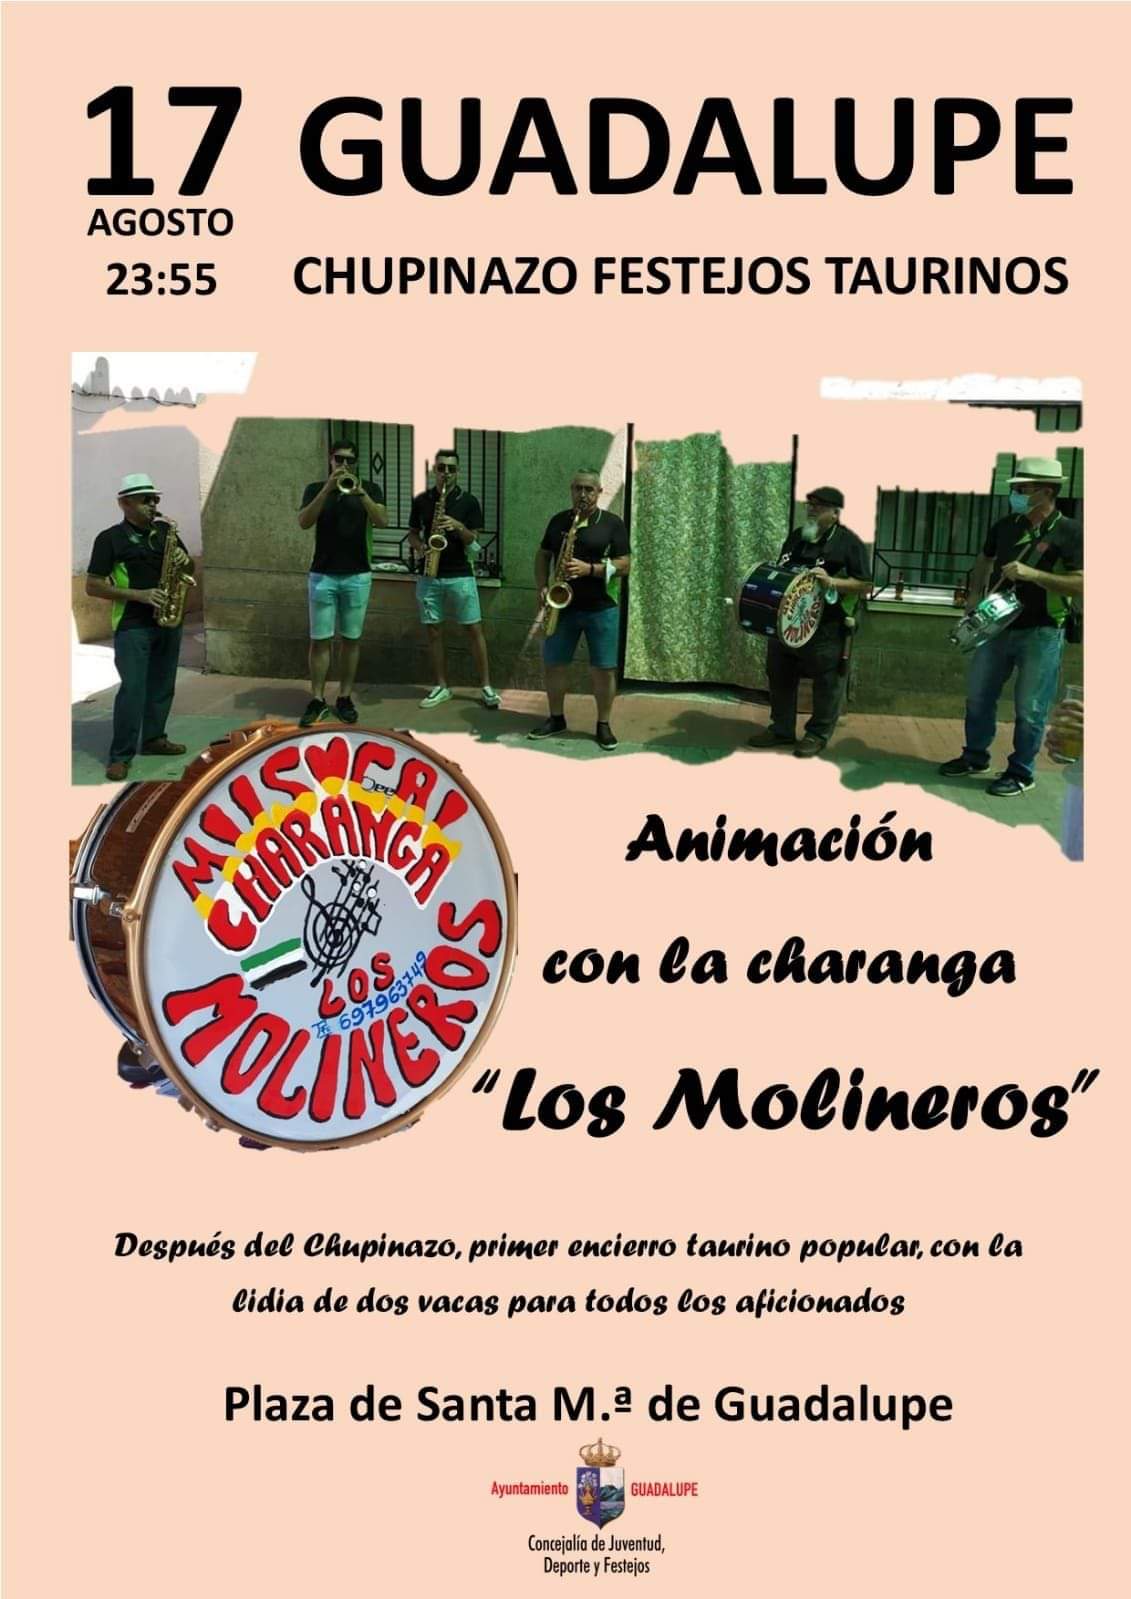 Chupinazo festejos taurinos (2022) - Guadalupe (Cáceres)